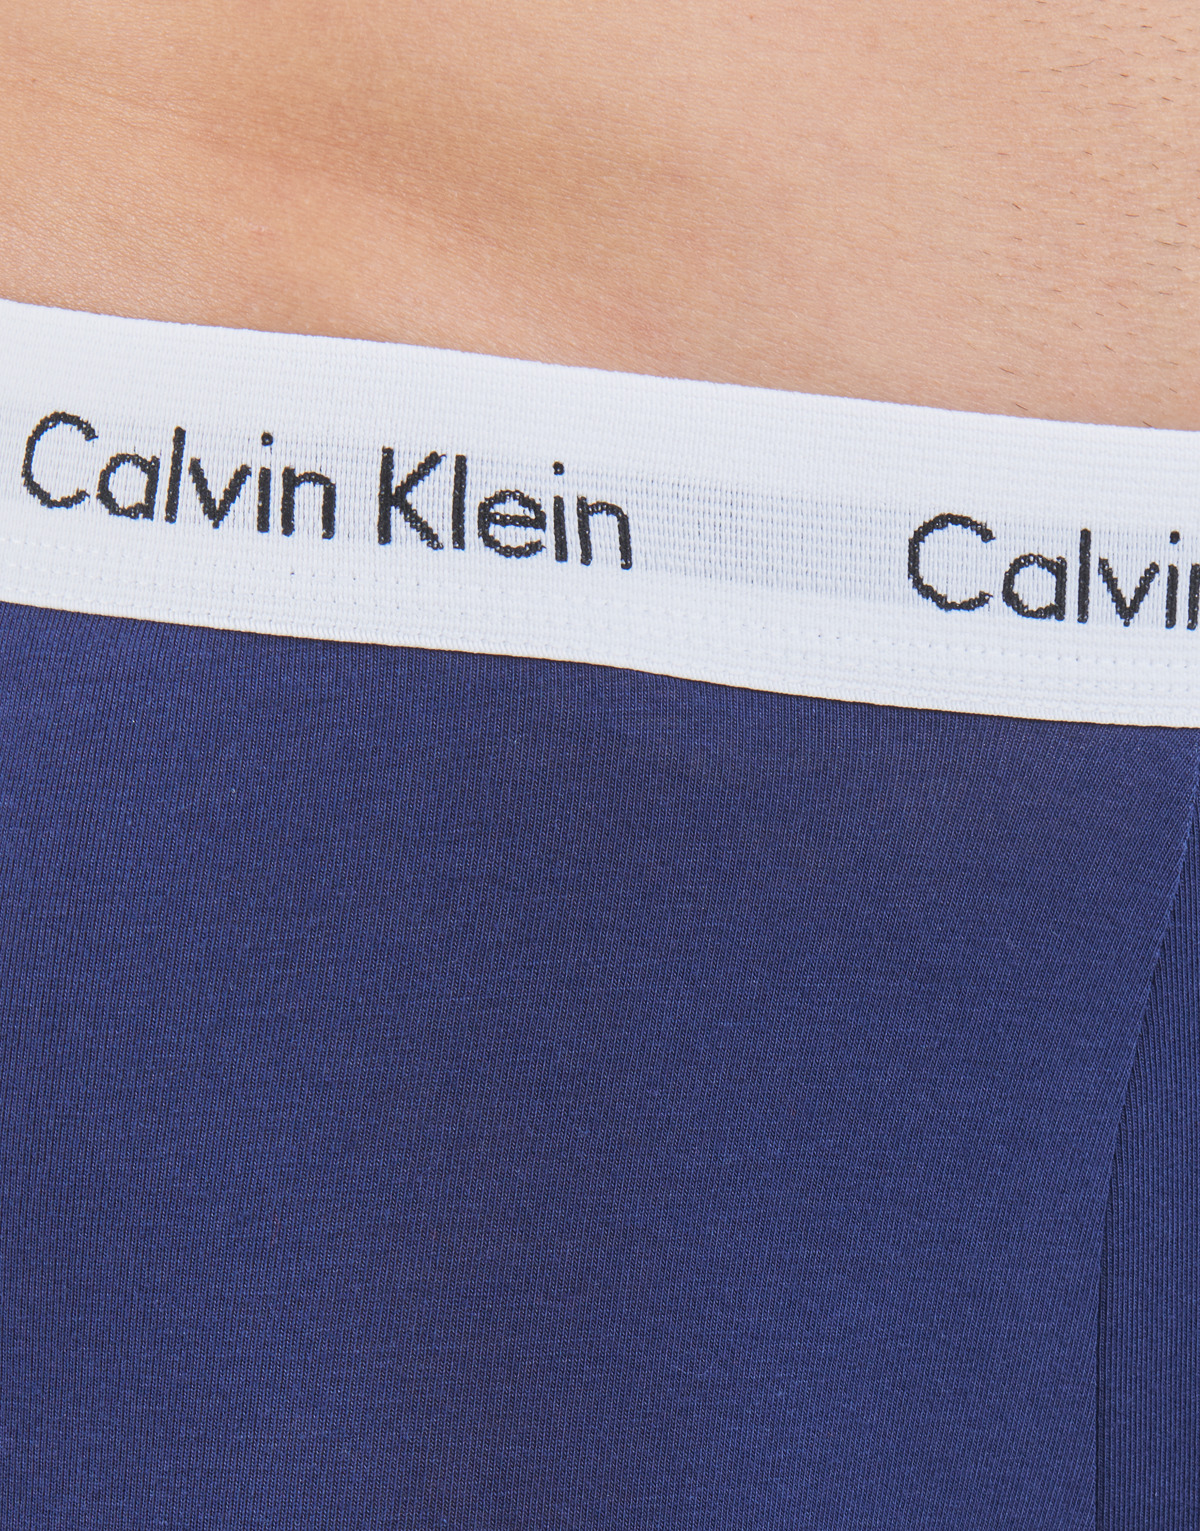 Calvin Klein Jeans Marine / Blanc / Rouge RISE TRUNK X3 qtWwE4md